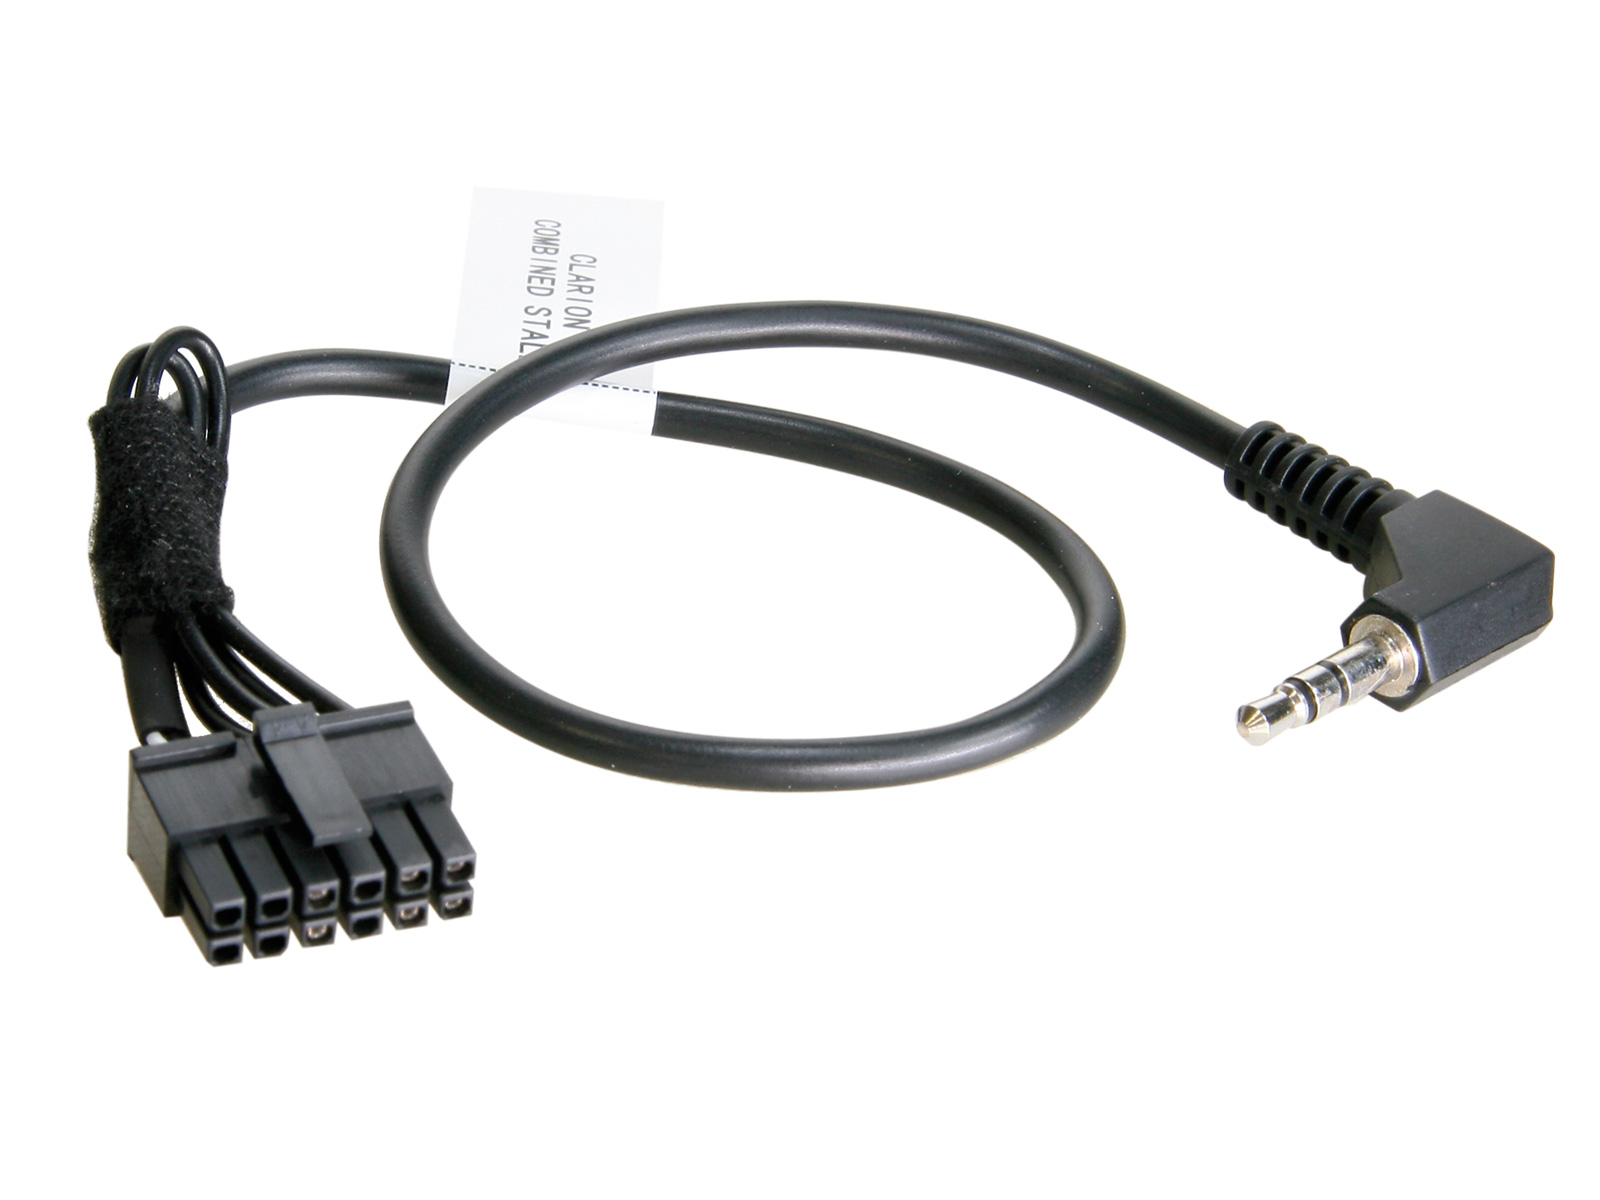 ACV Adapterkabel (blaue Box) und Connects2 Lenkradinterface adaptiert auf Clarion